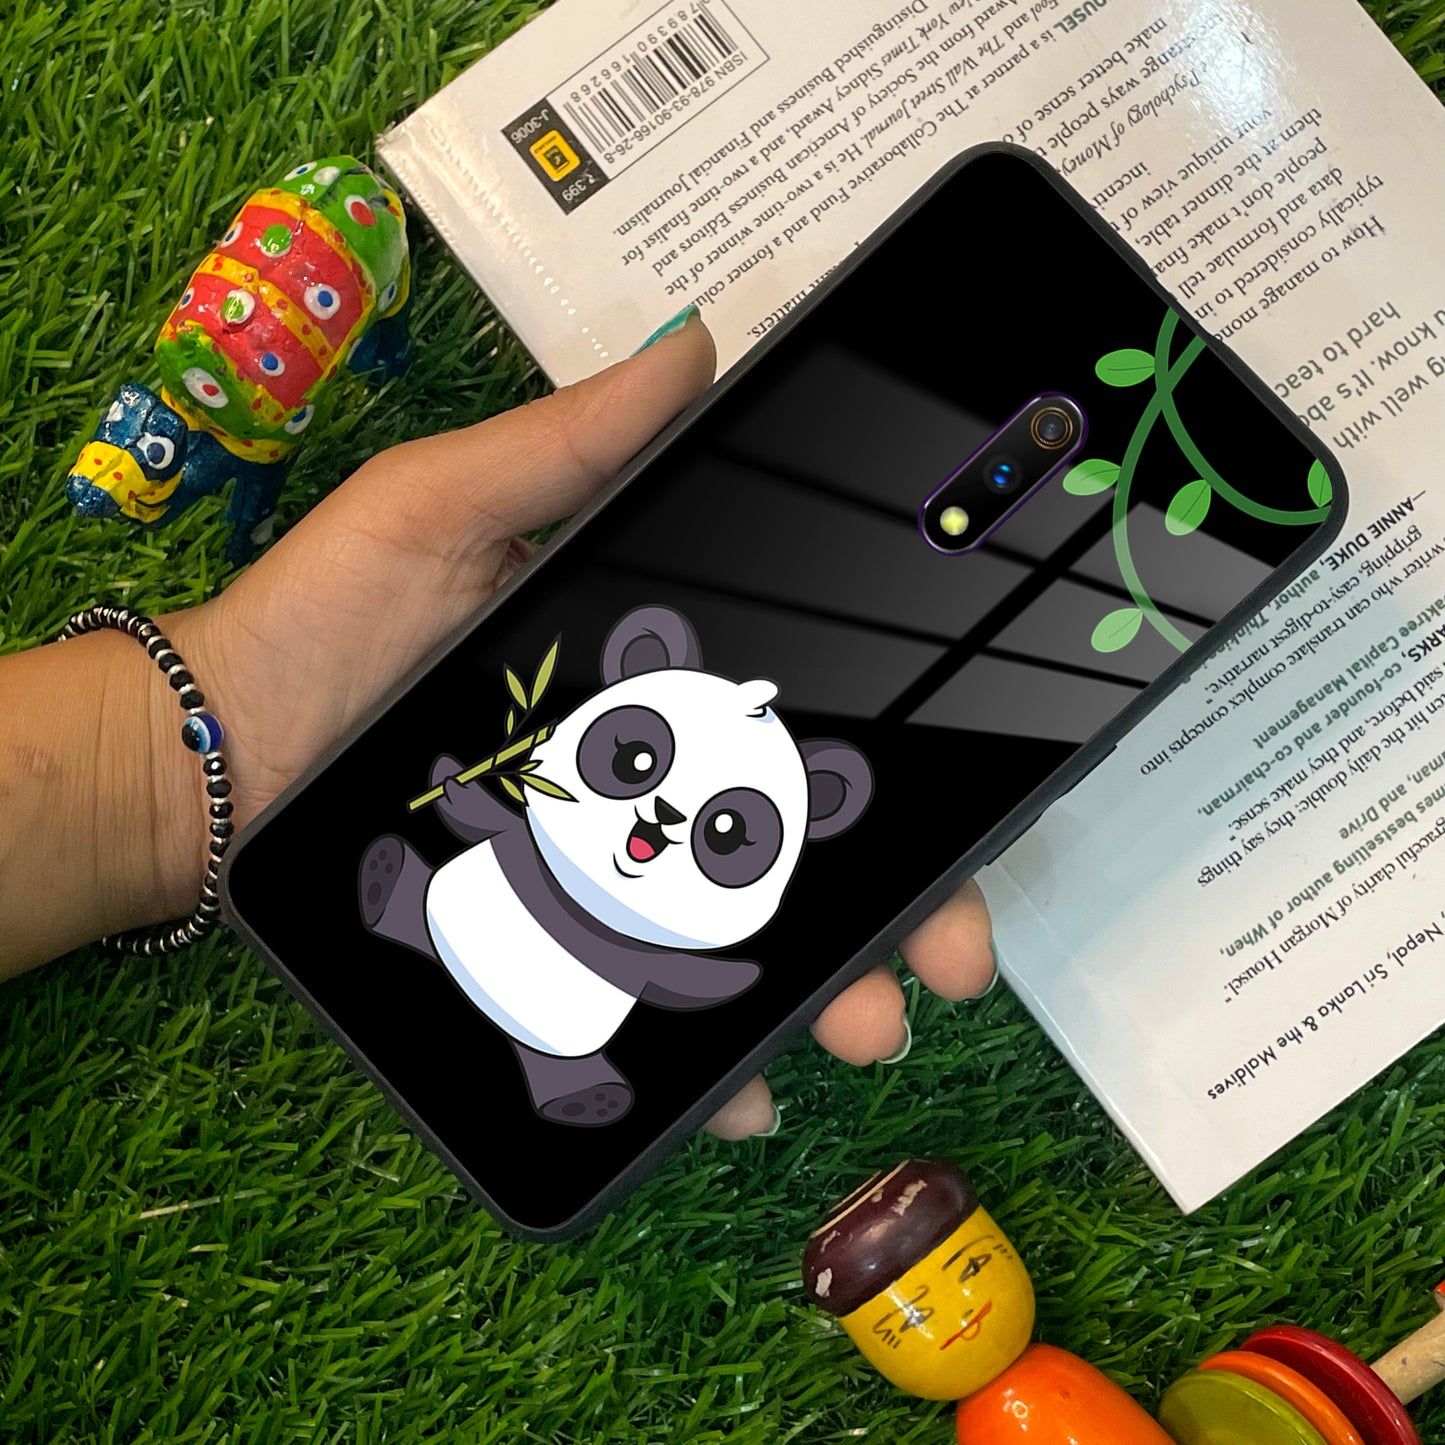 Black Panda Glass Phone Case For Realme/Narzo